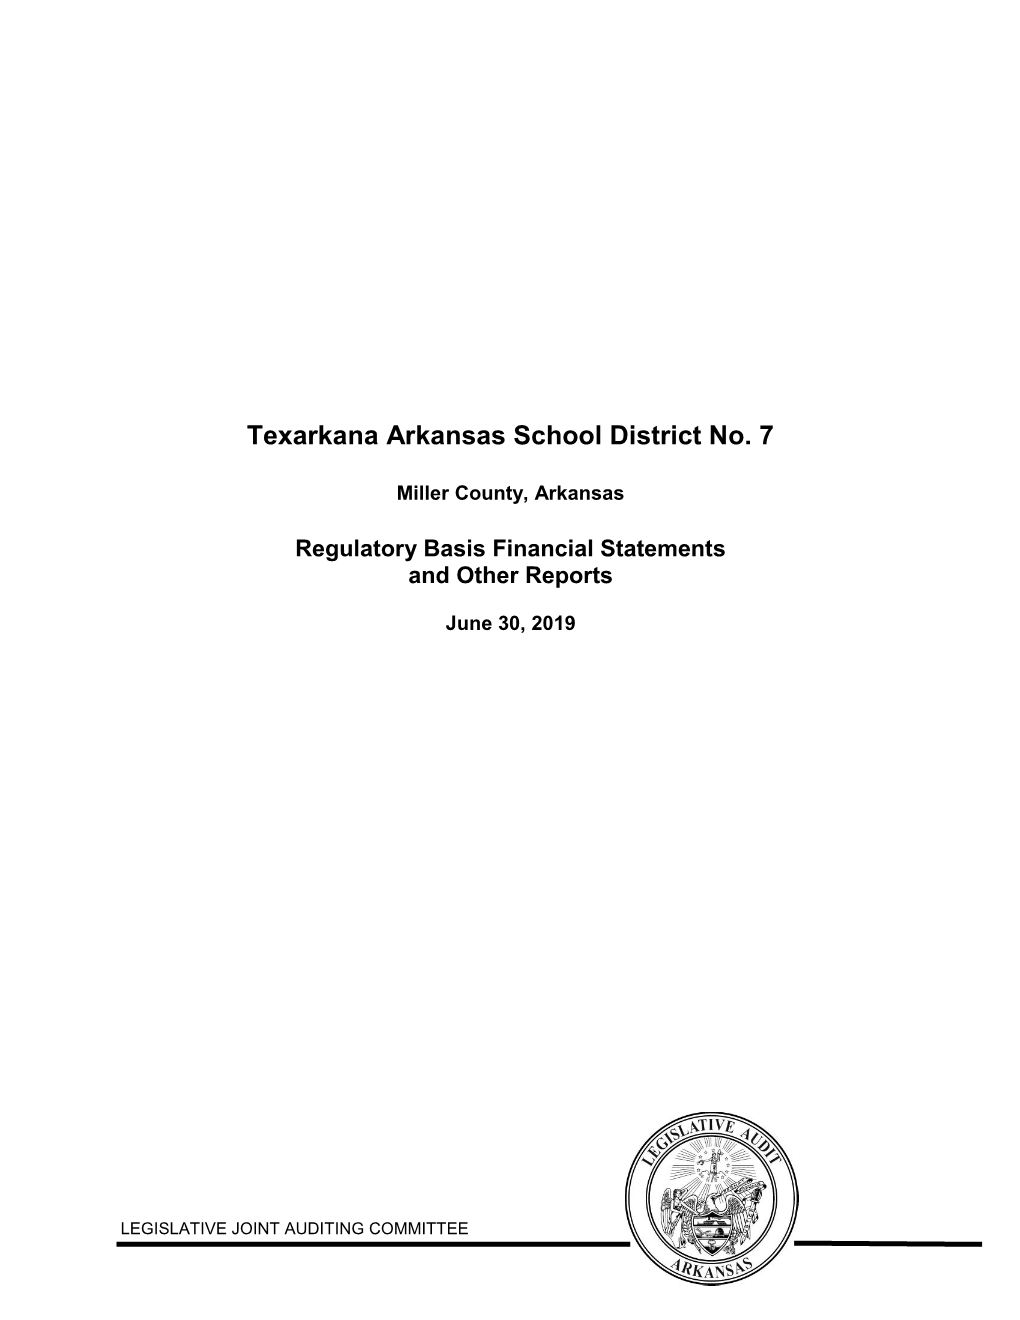 Texarkana Arkansas School District EDSD24719 [6/30/2019] (In Process